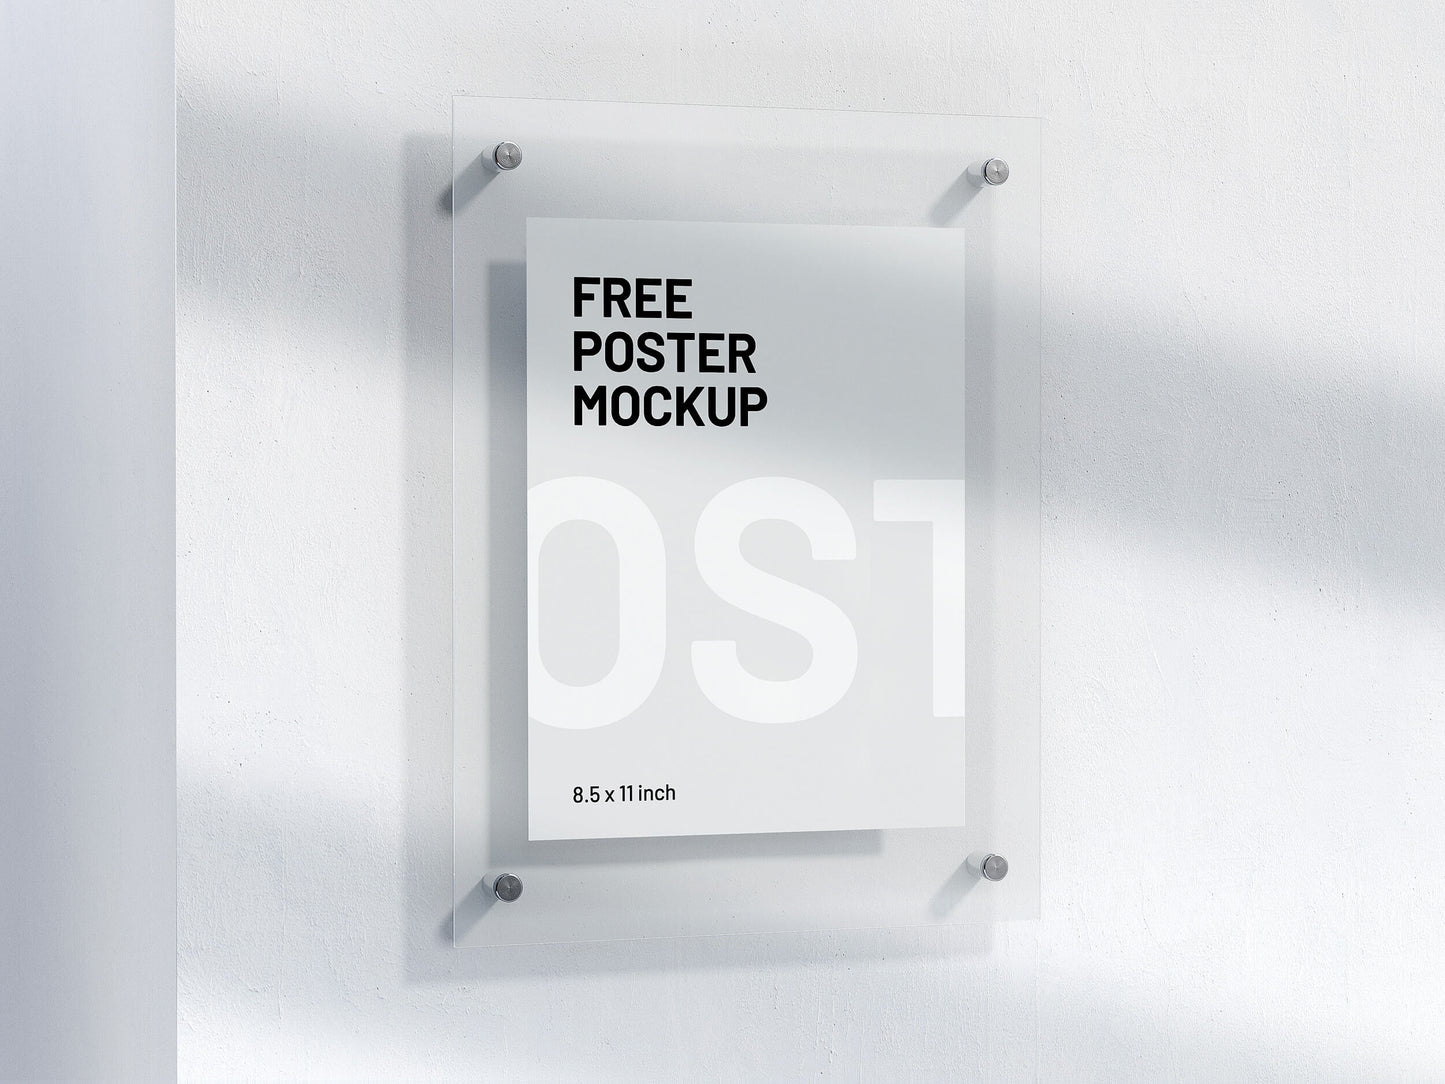 Free Letter Size Poster Mockup PSD